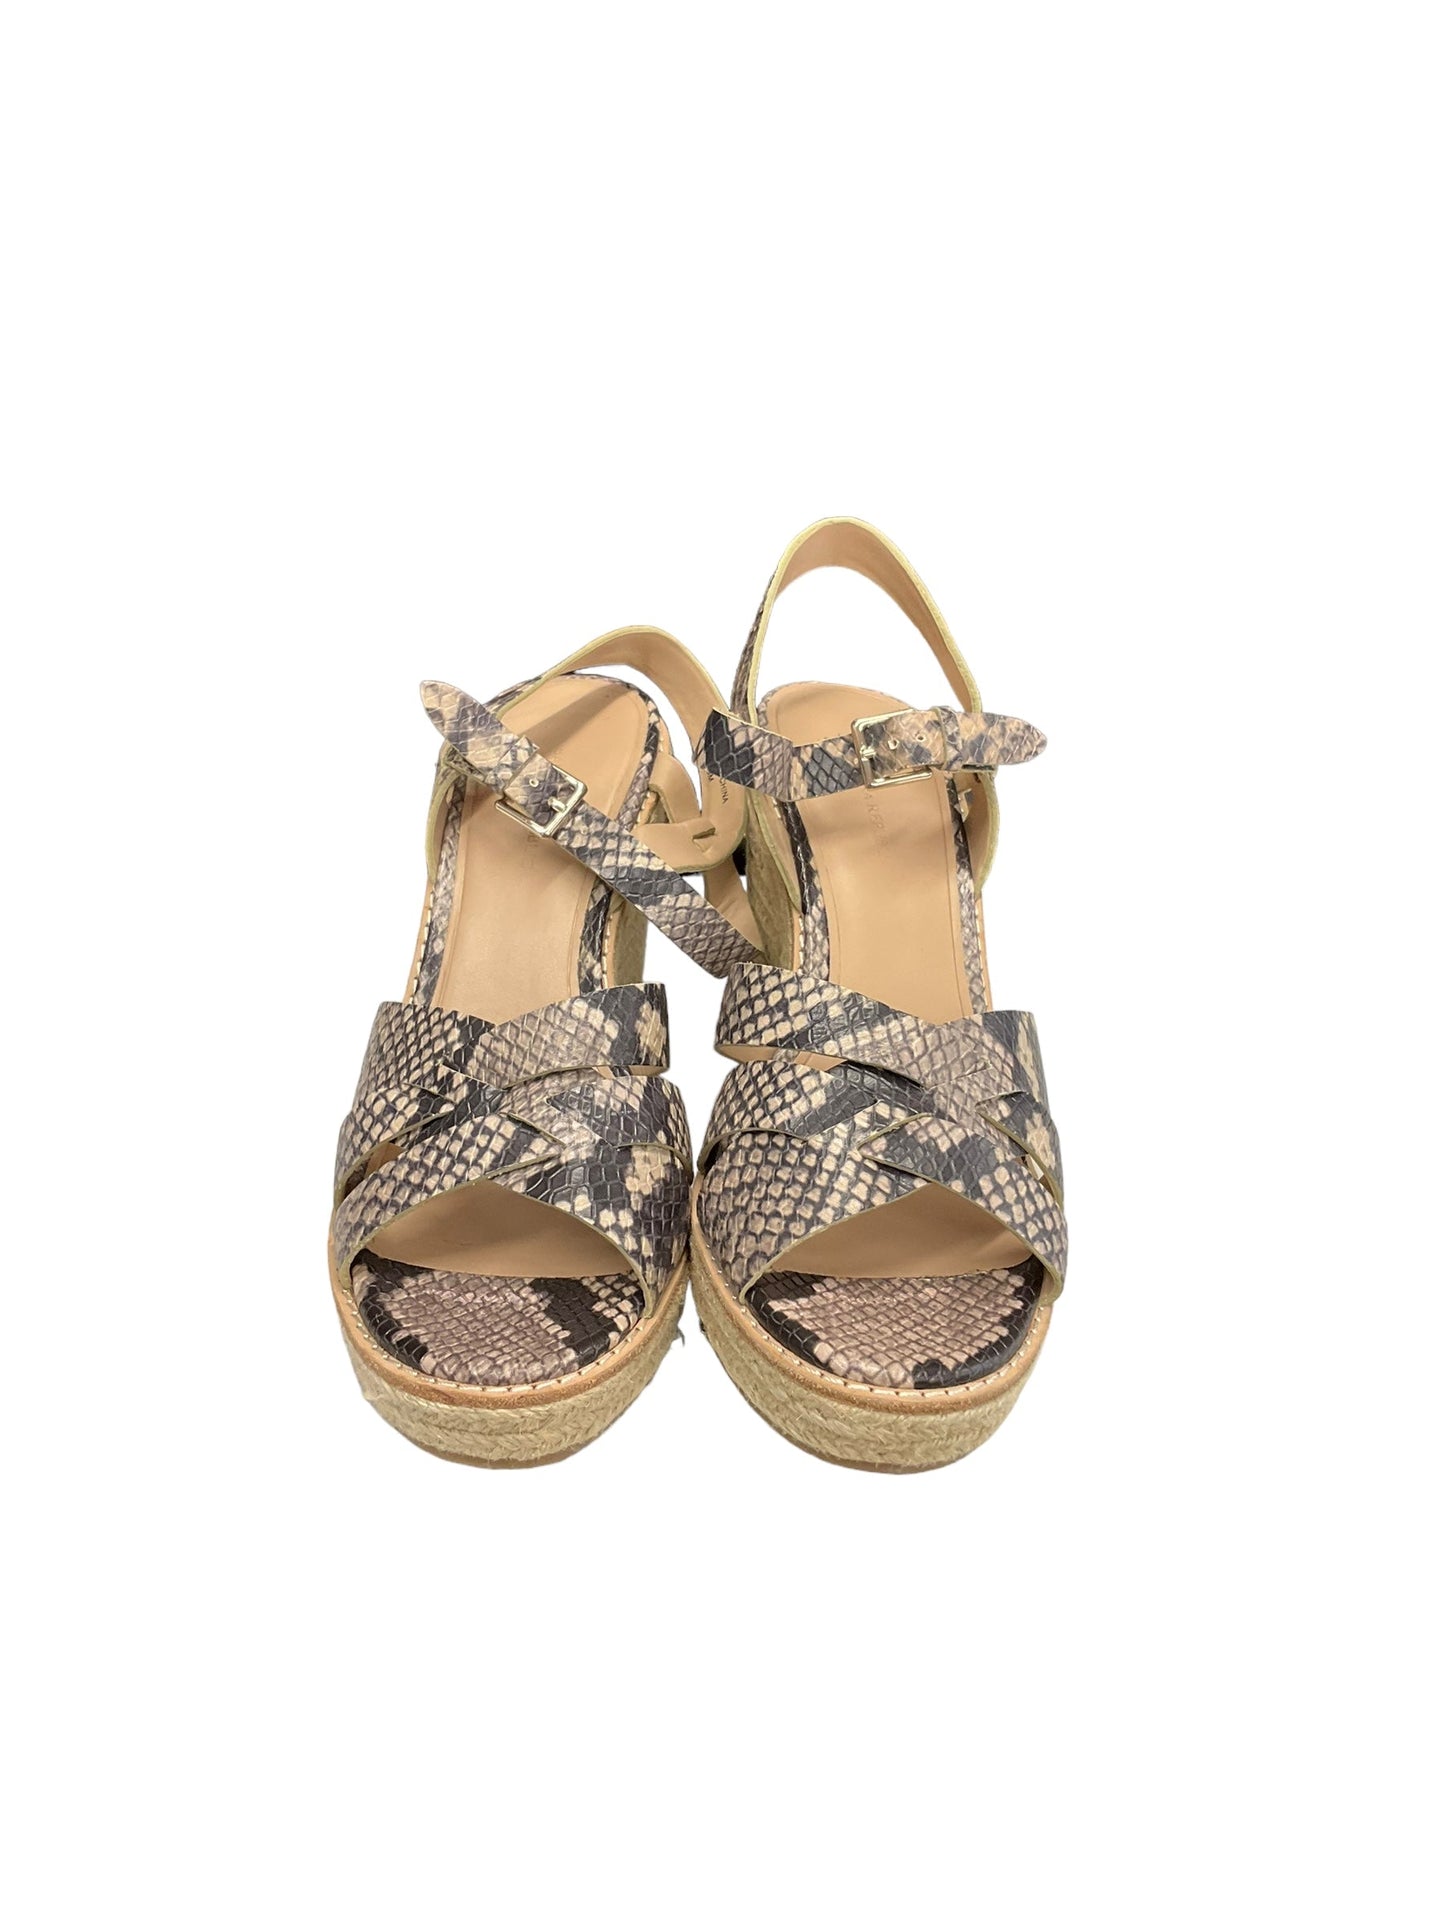 Snakeskin Print Shoes Heels Wedge Banana Republic, Size 9